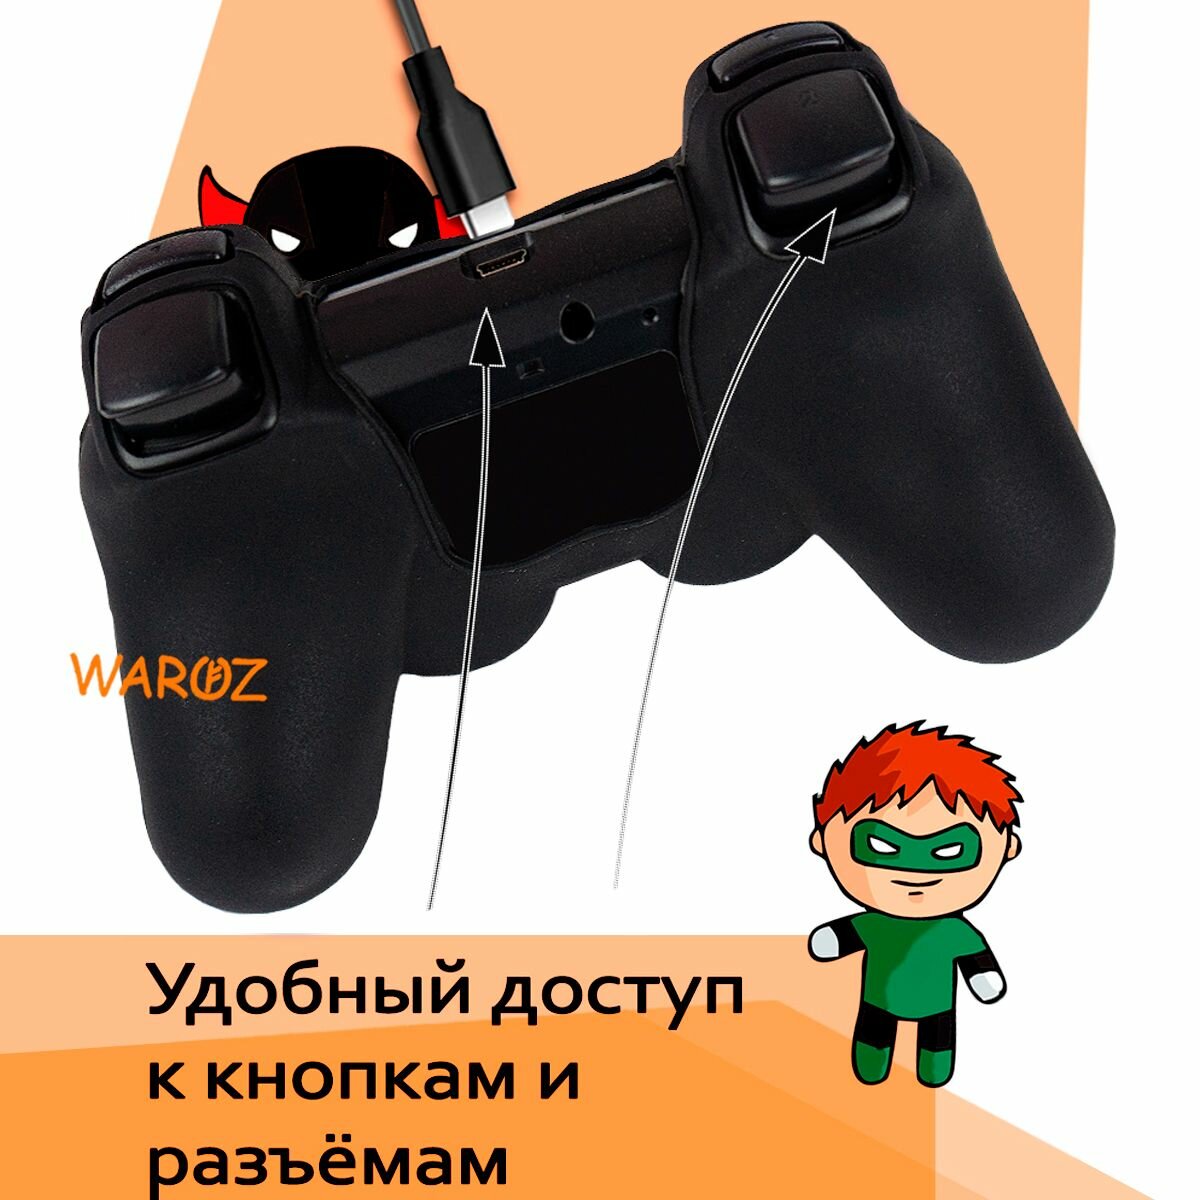 Чехол для геймпада PlayStation 3 Dualshock 3